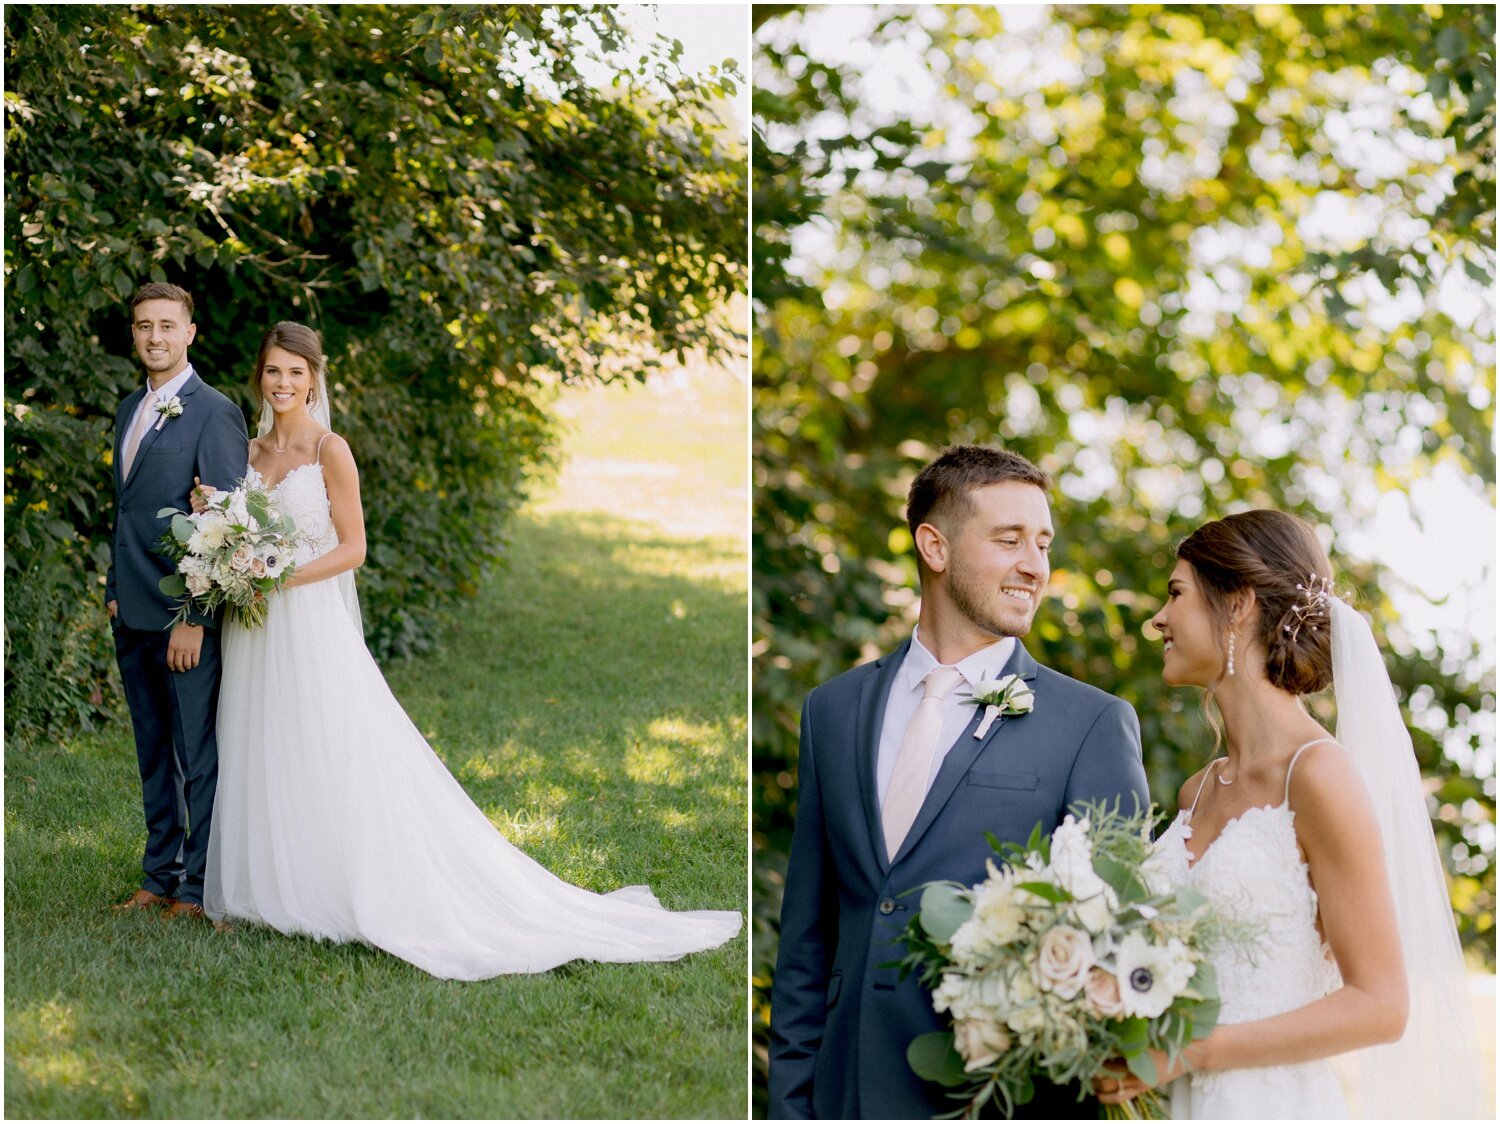 Andrew Ferren Photography- The Chateau - Iowa Wedding Photographer Des Moines Iowa - Videographer_0222.jpg